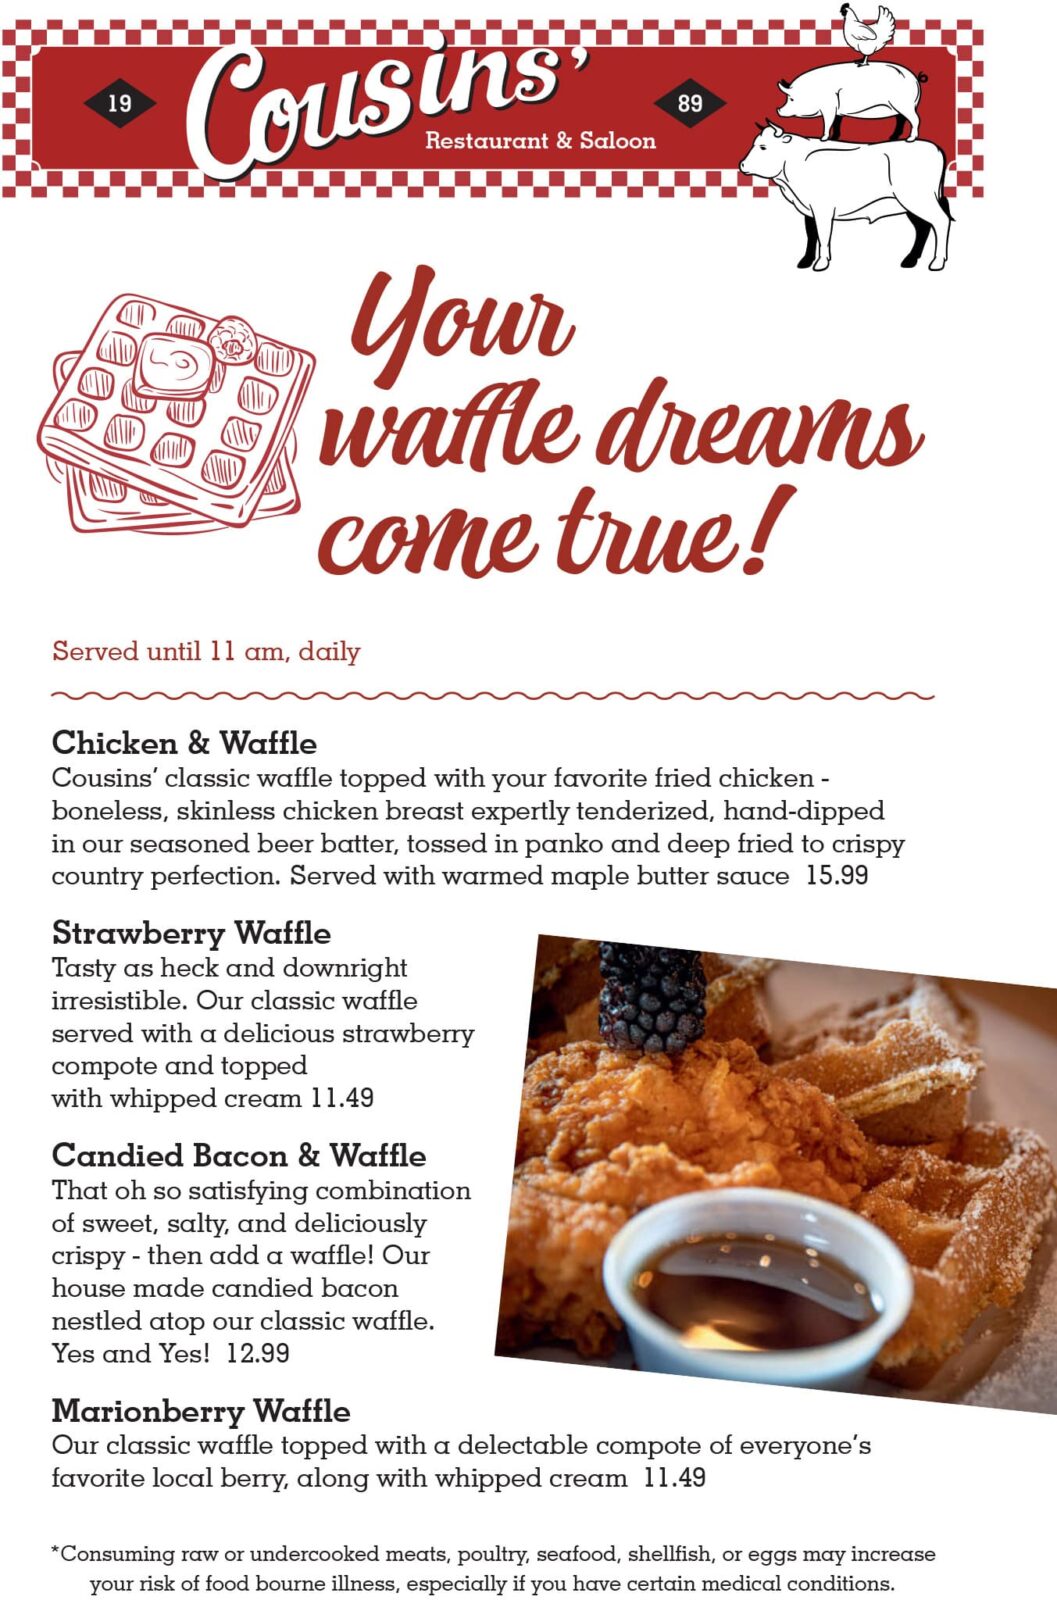 Your waffle dreams come true!